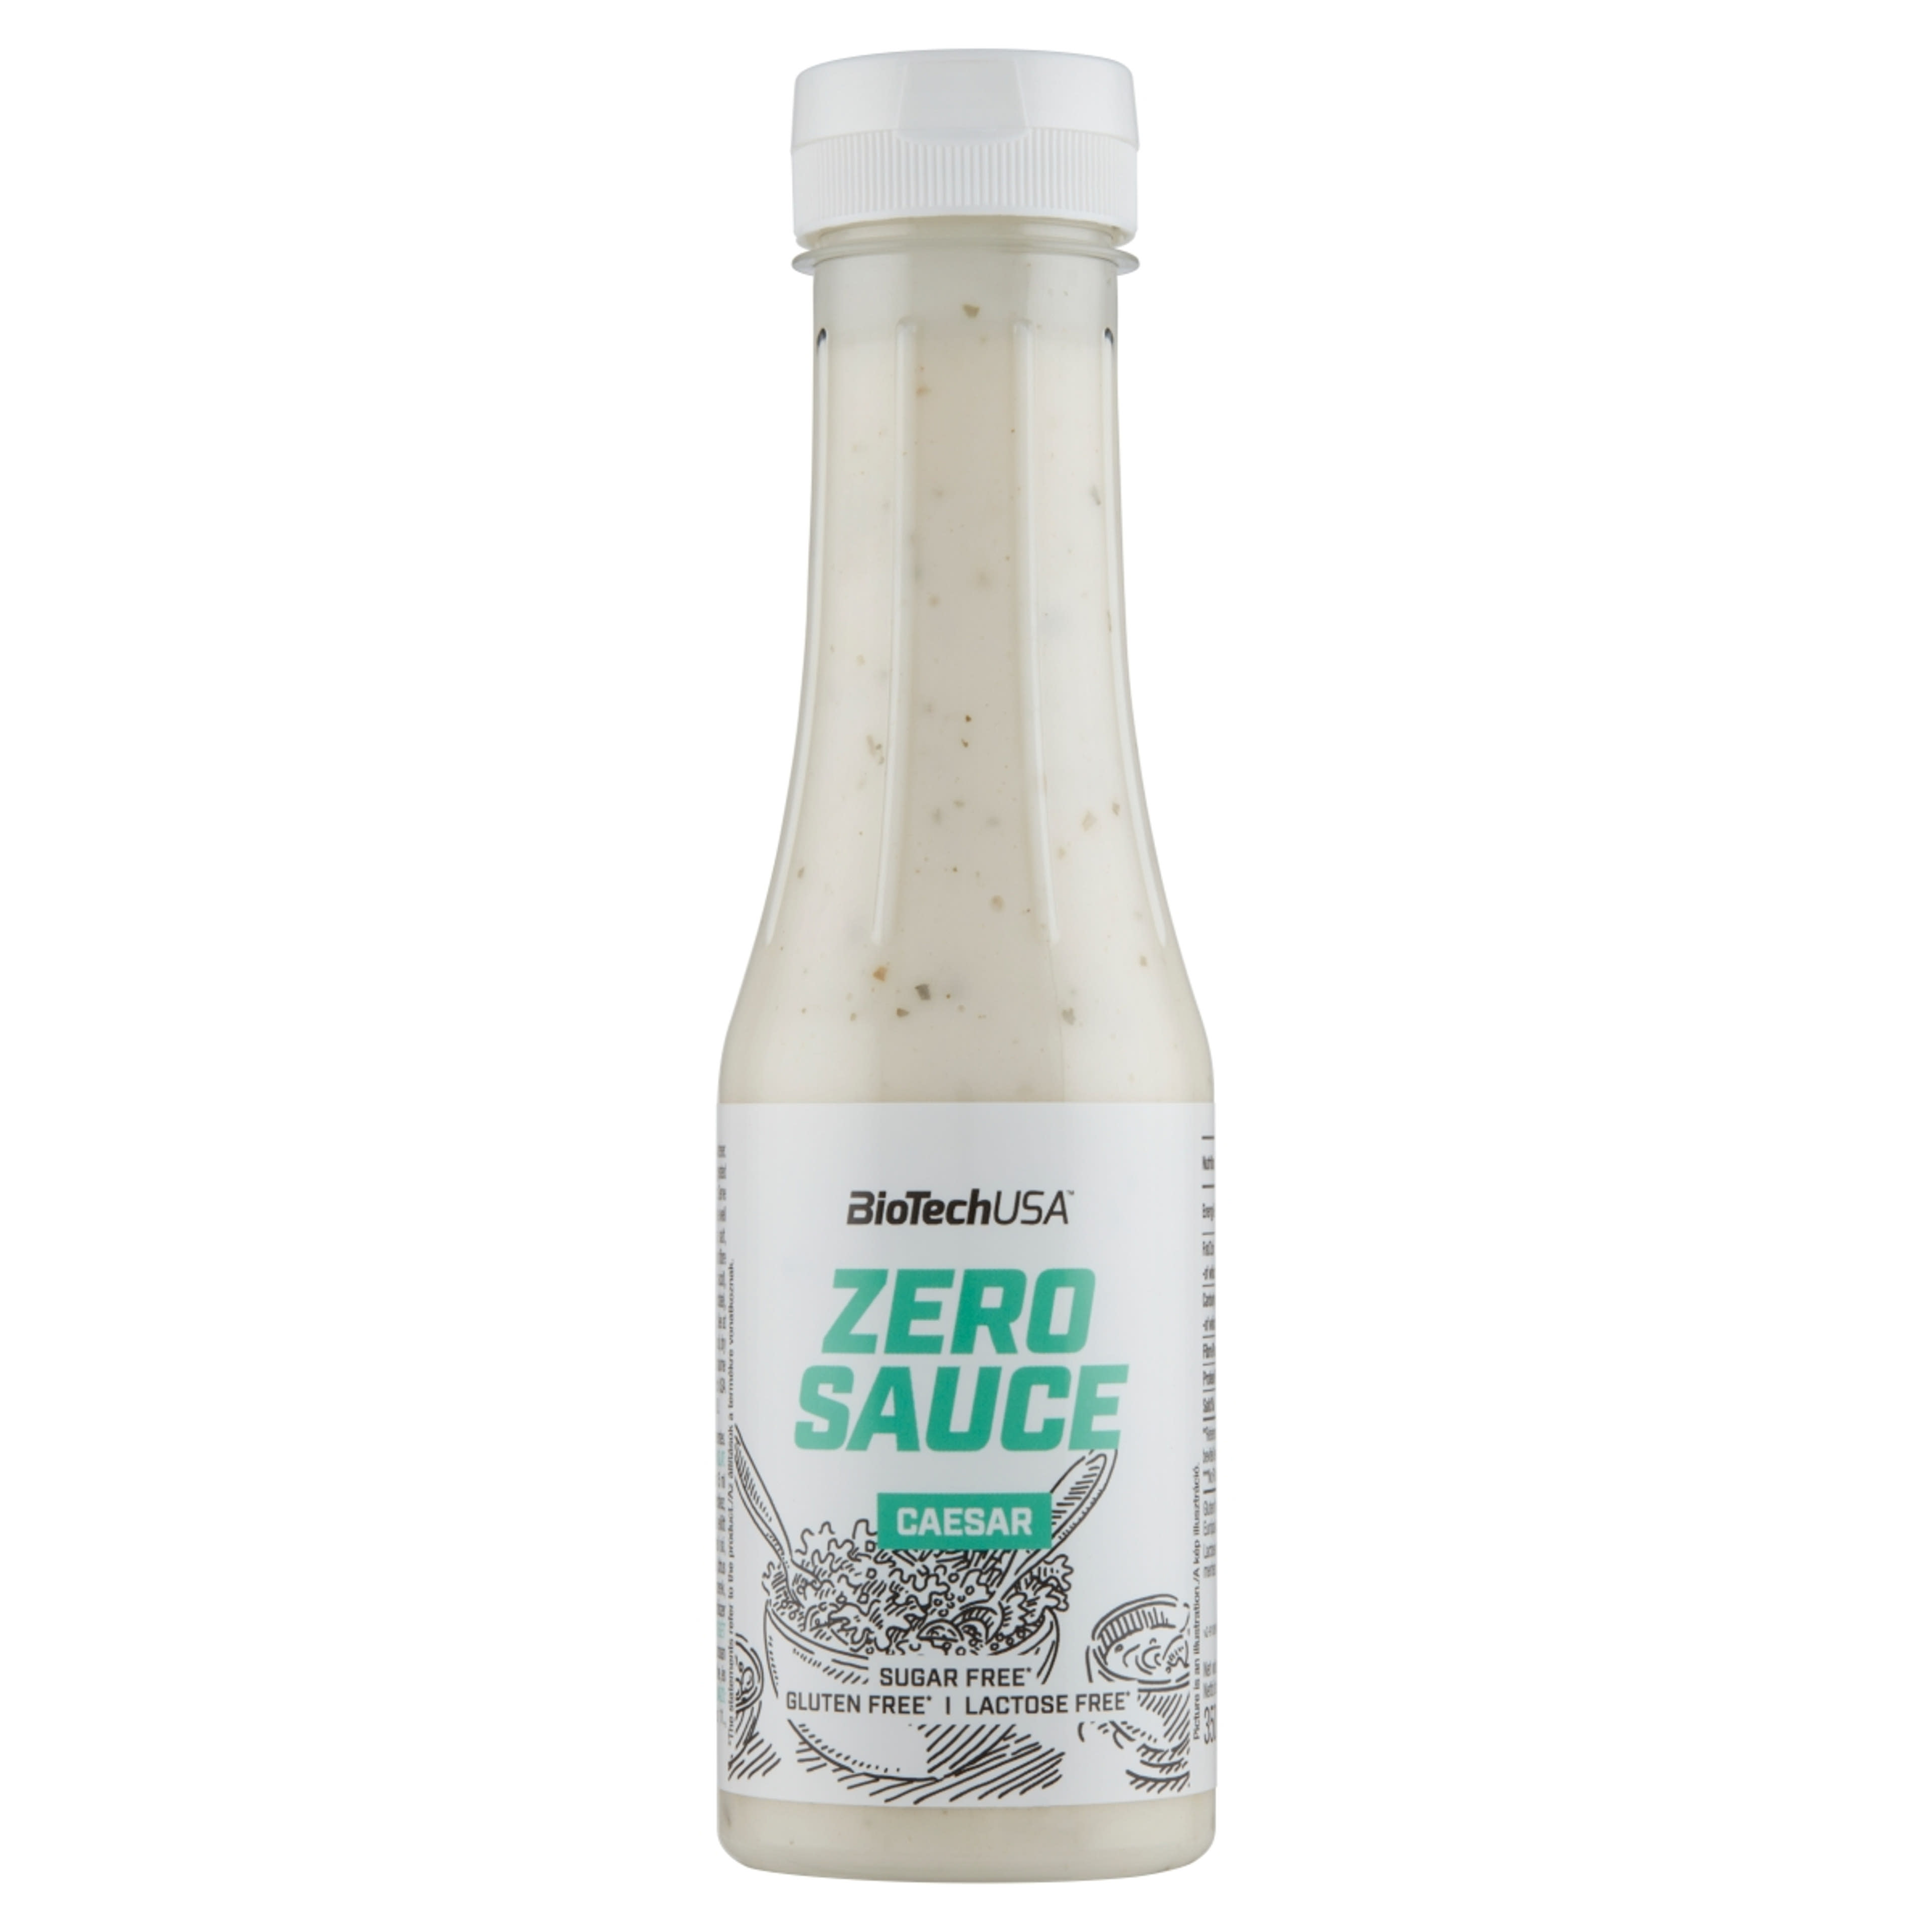 BioTechUSA Zero Sauce Caesar öntet - 350 ml